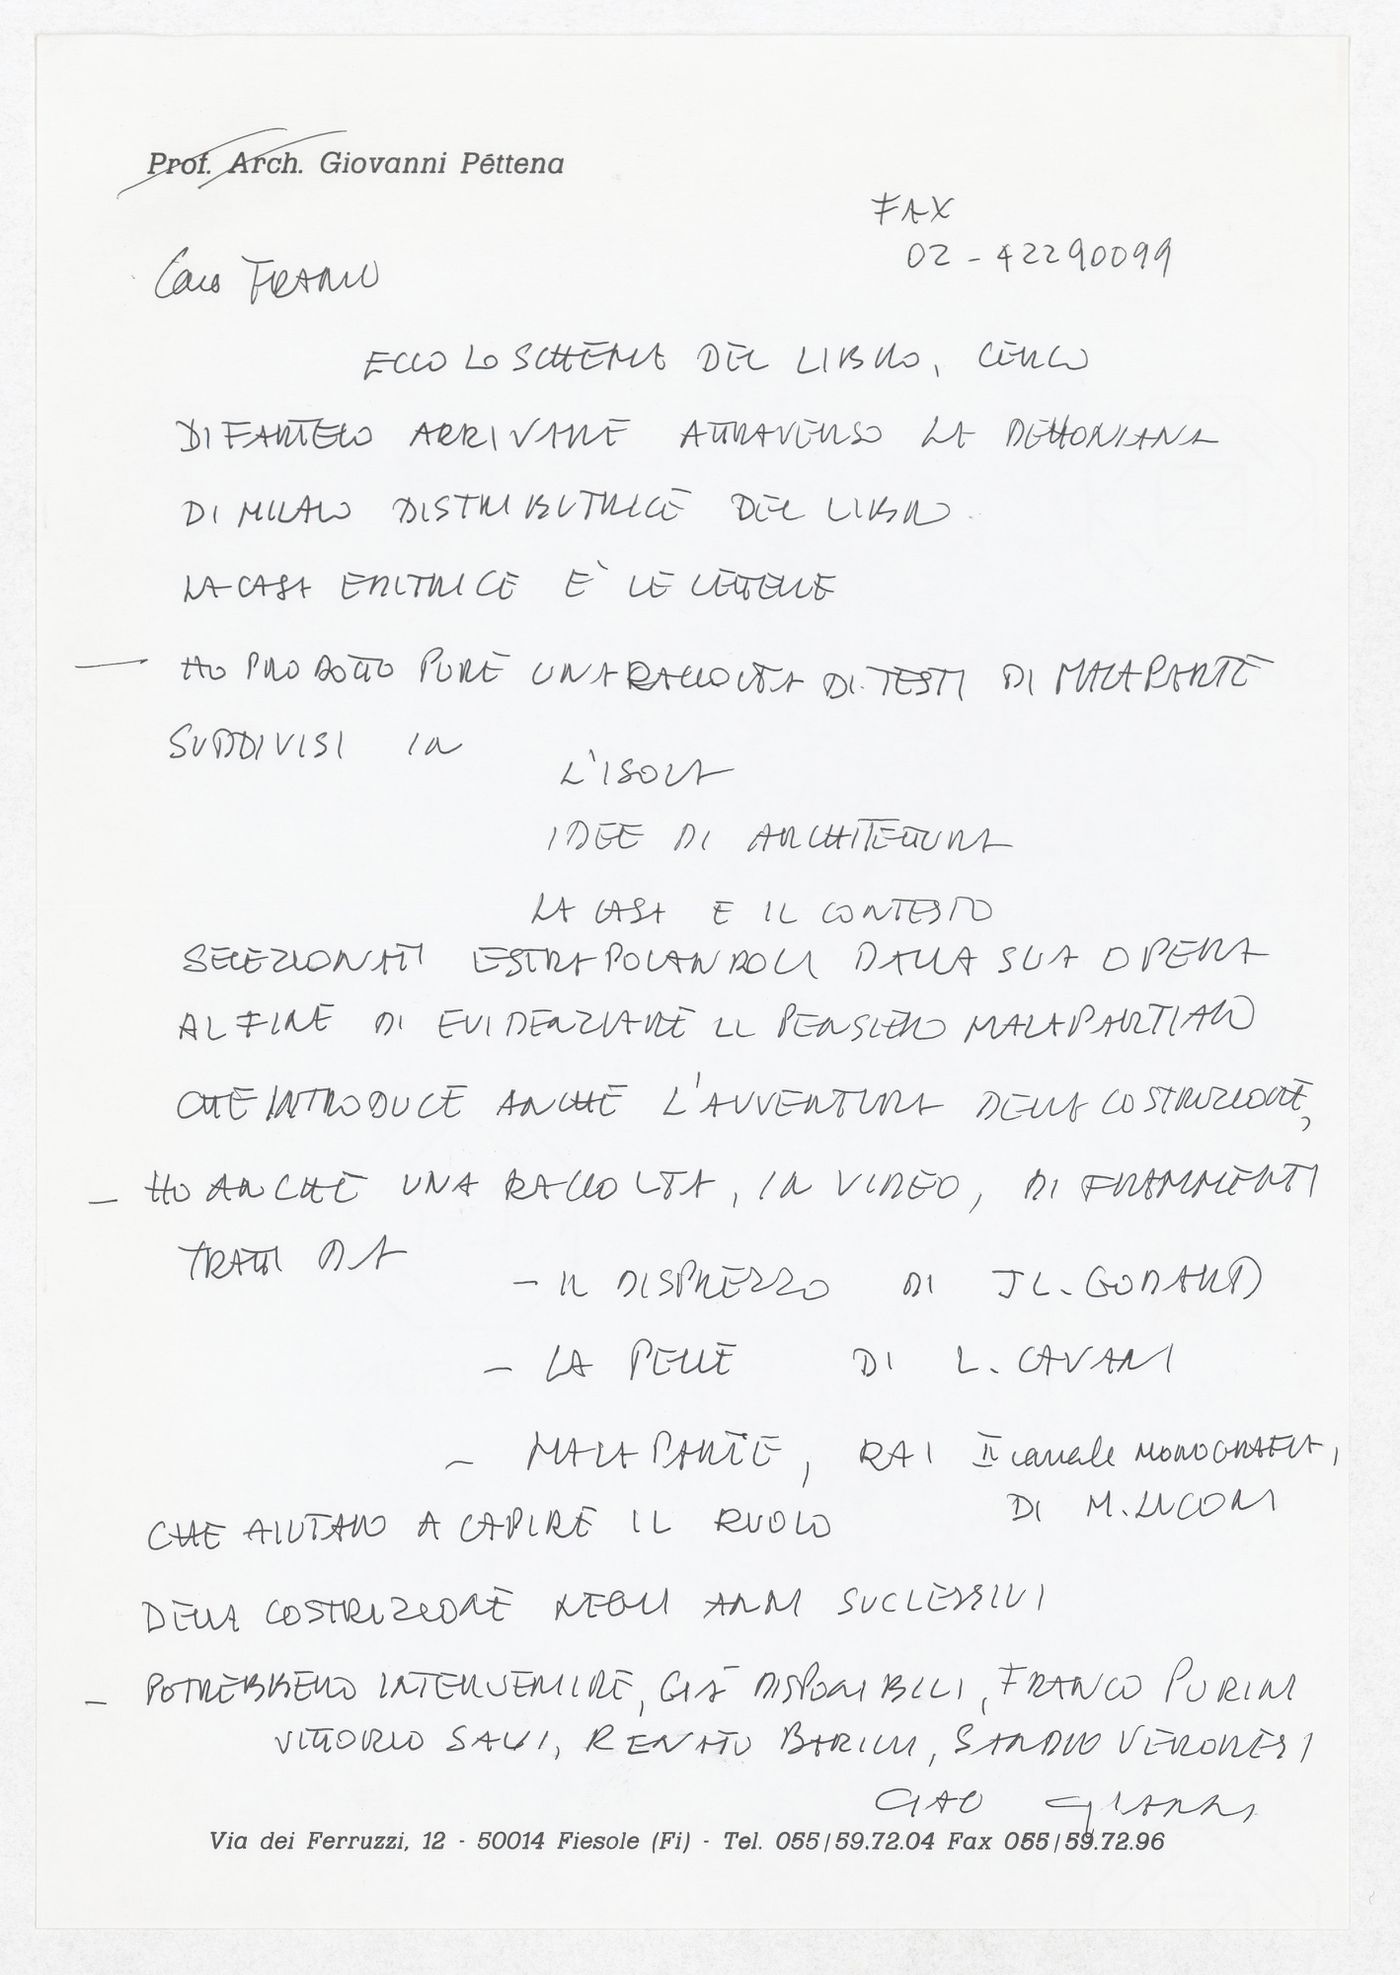 Correspondence related to the exhibition Casa Malaparte